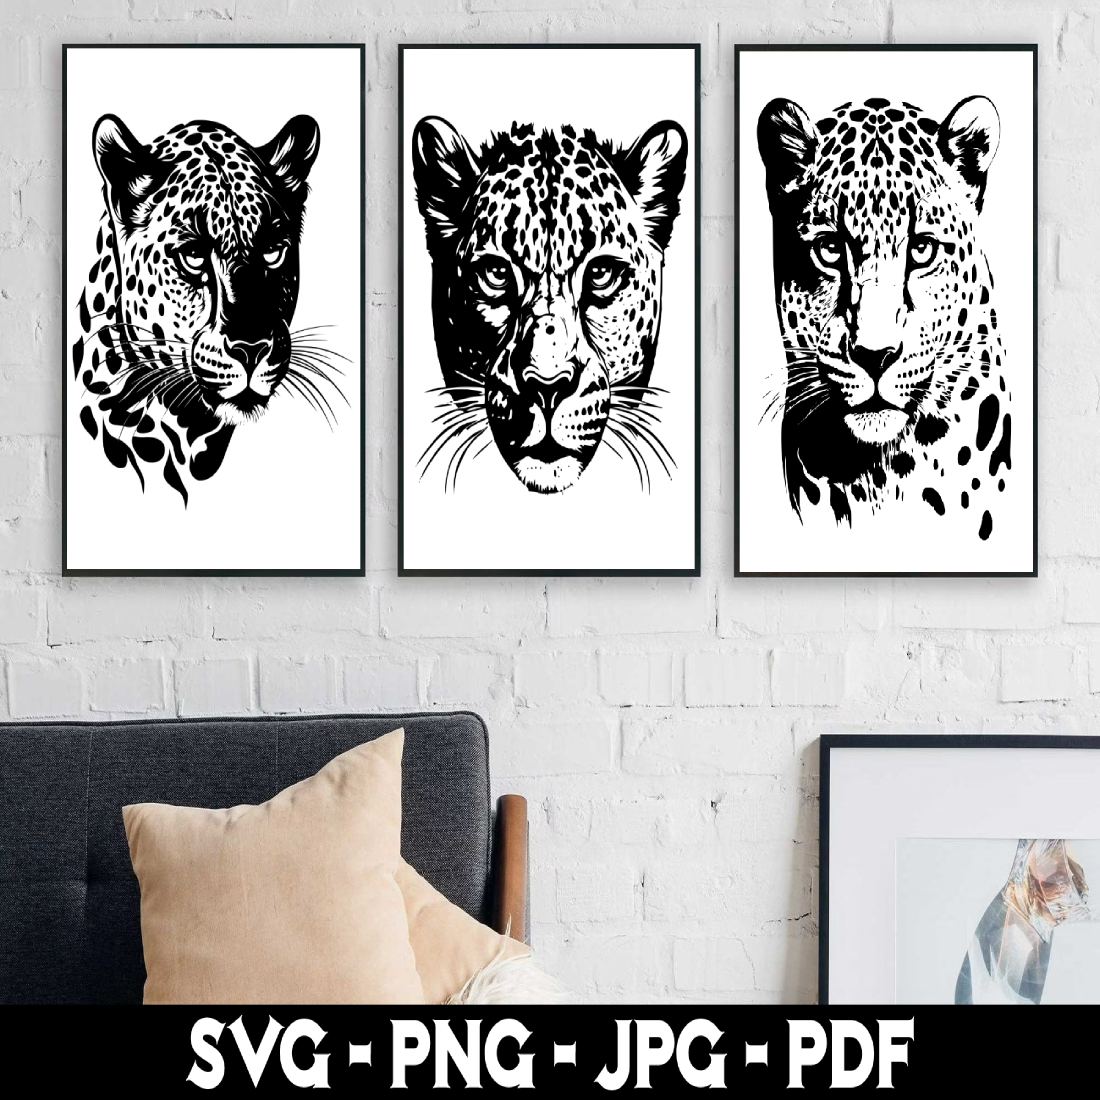 3 Jaguar SVG/PNG Design for Posters/T-SHIRT, Modern Art, Animals Black and White cover image.